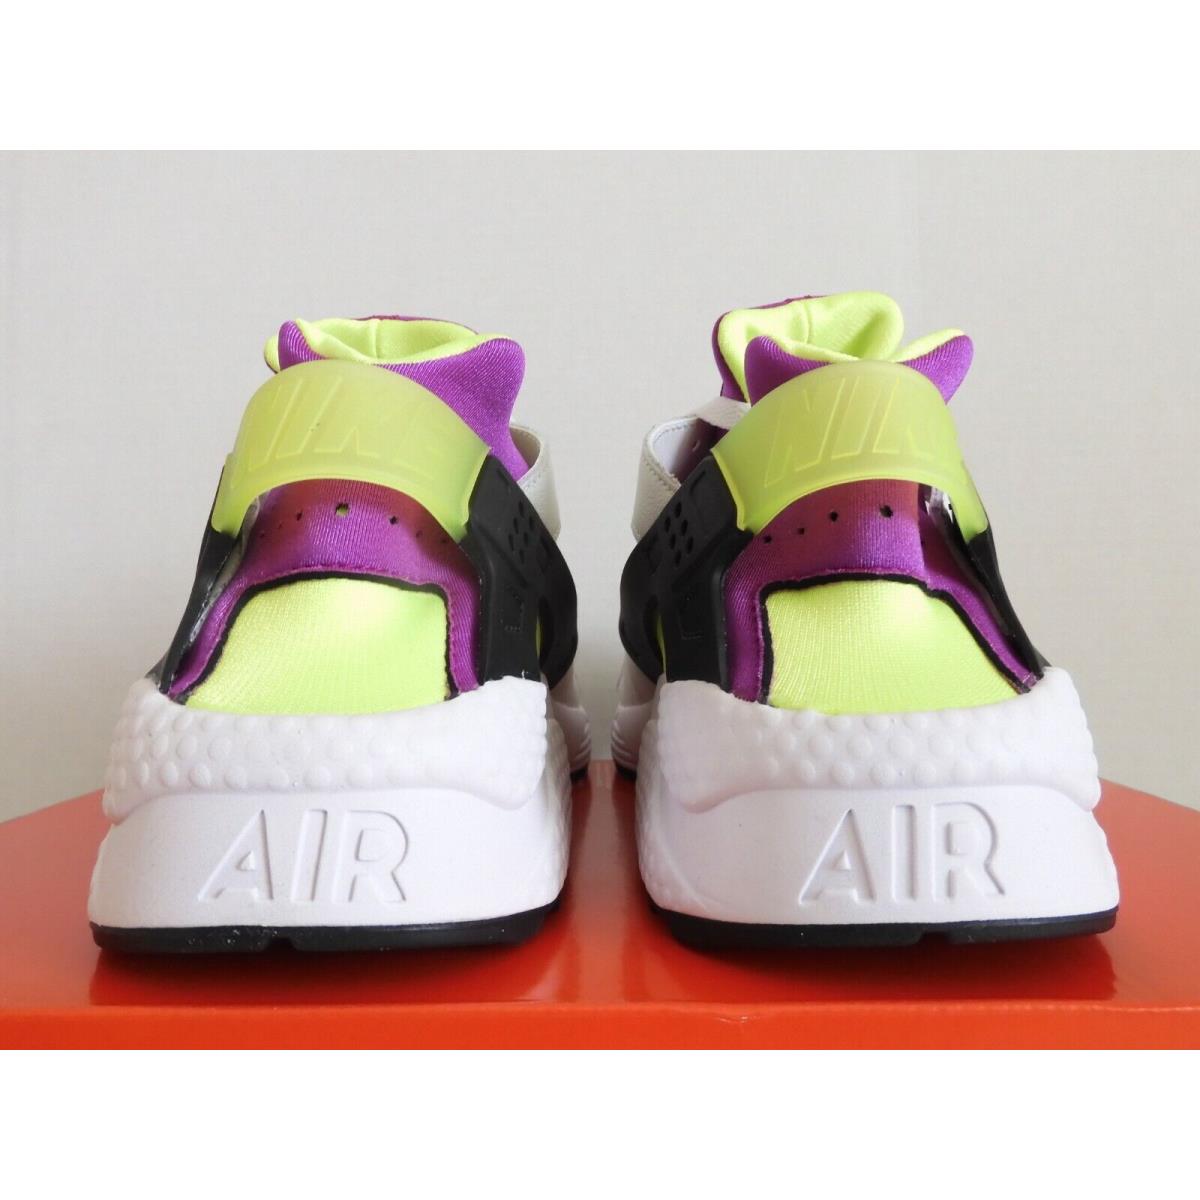 Nike shoes Air Huarache - White 2